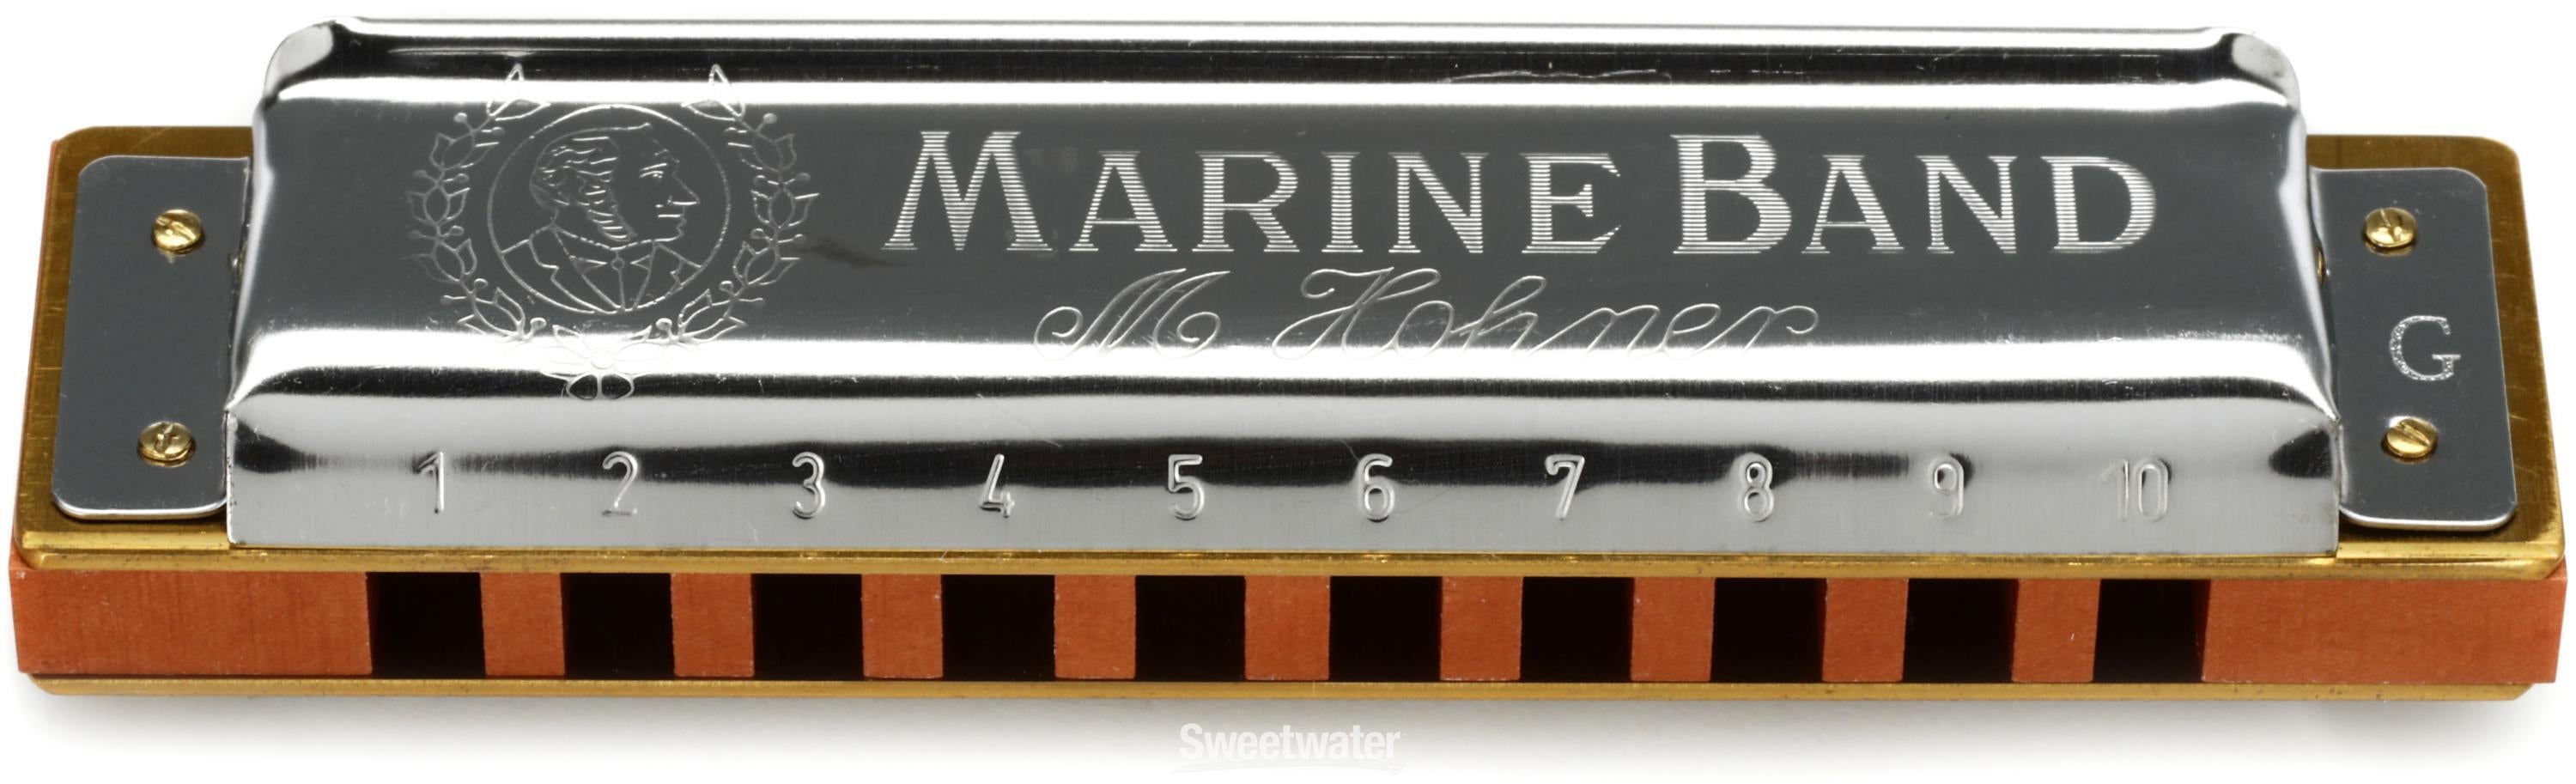 Hohner Marine Band 1896 Harmonica - Key of G | Sweetwater